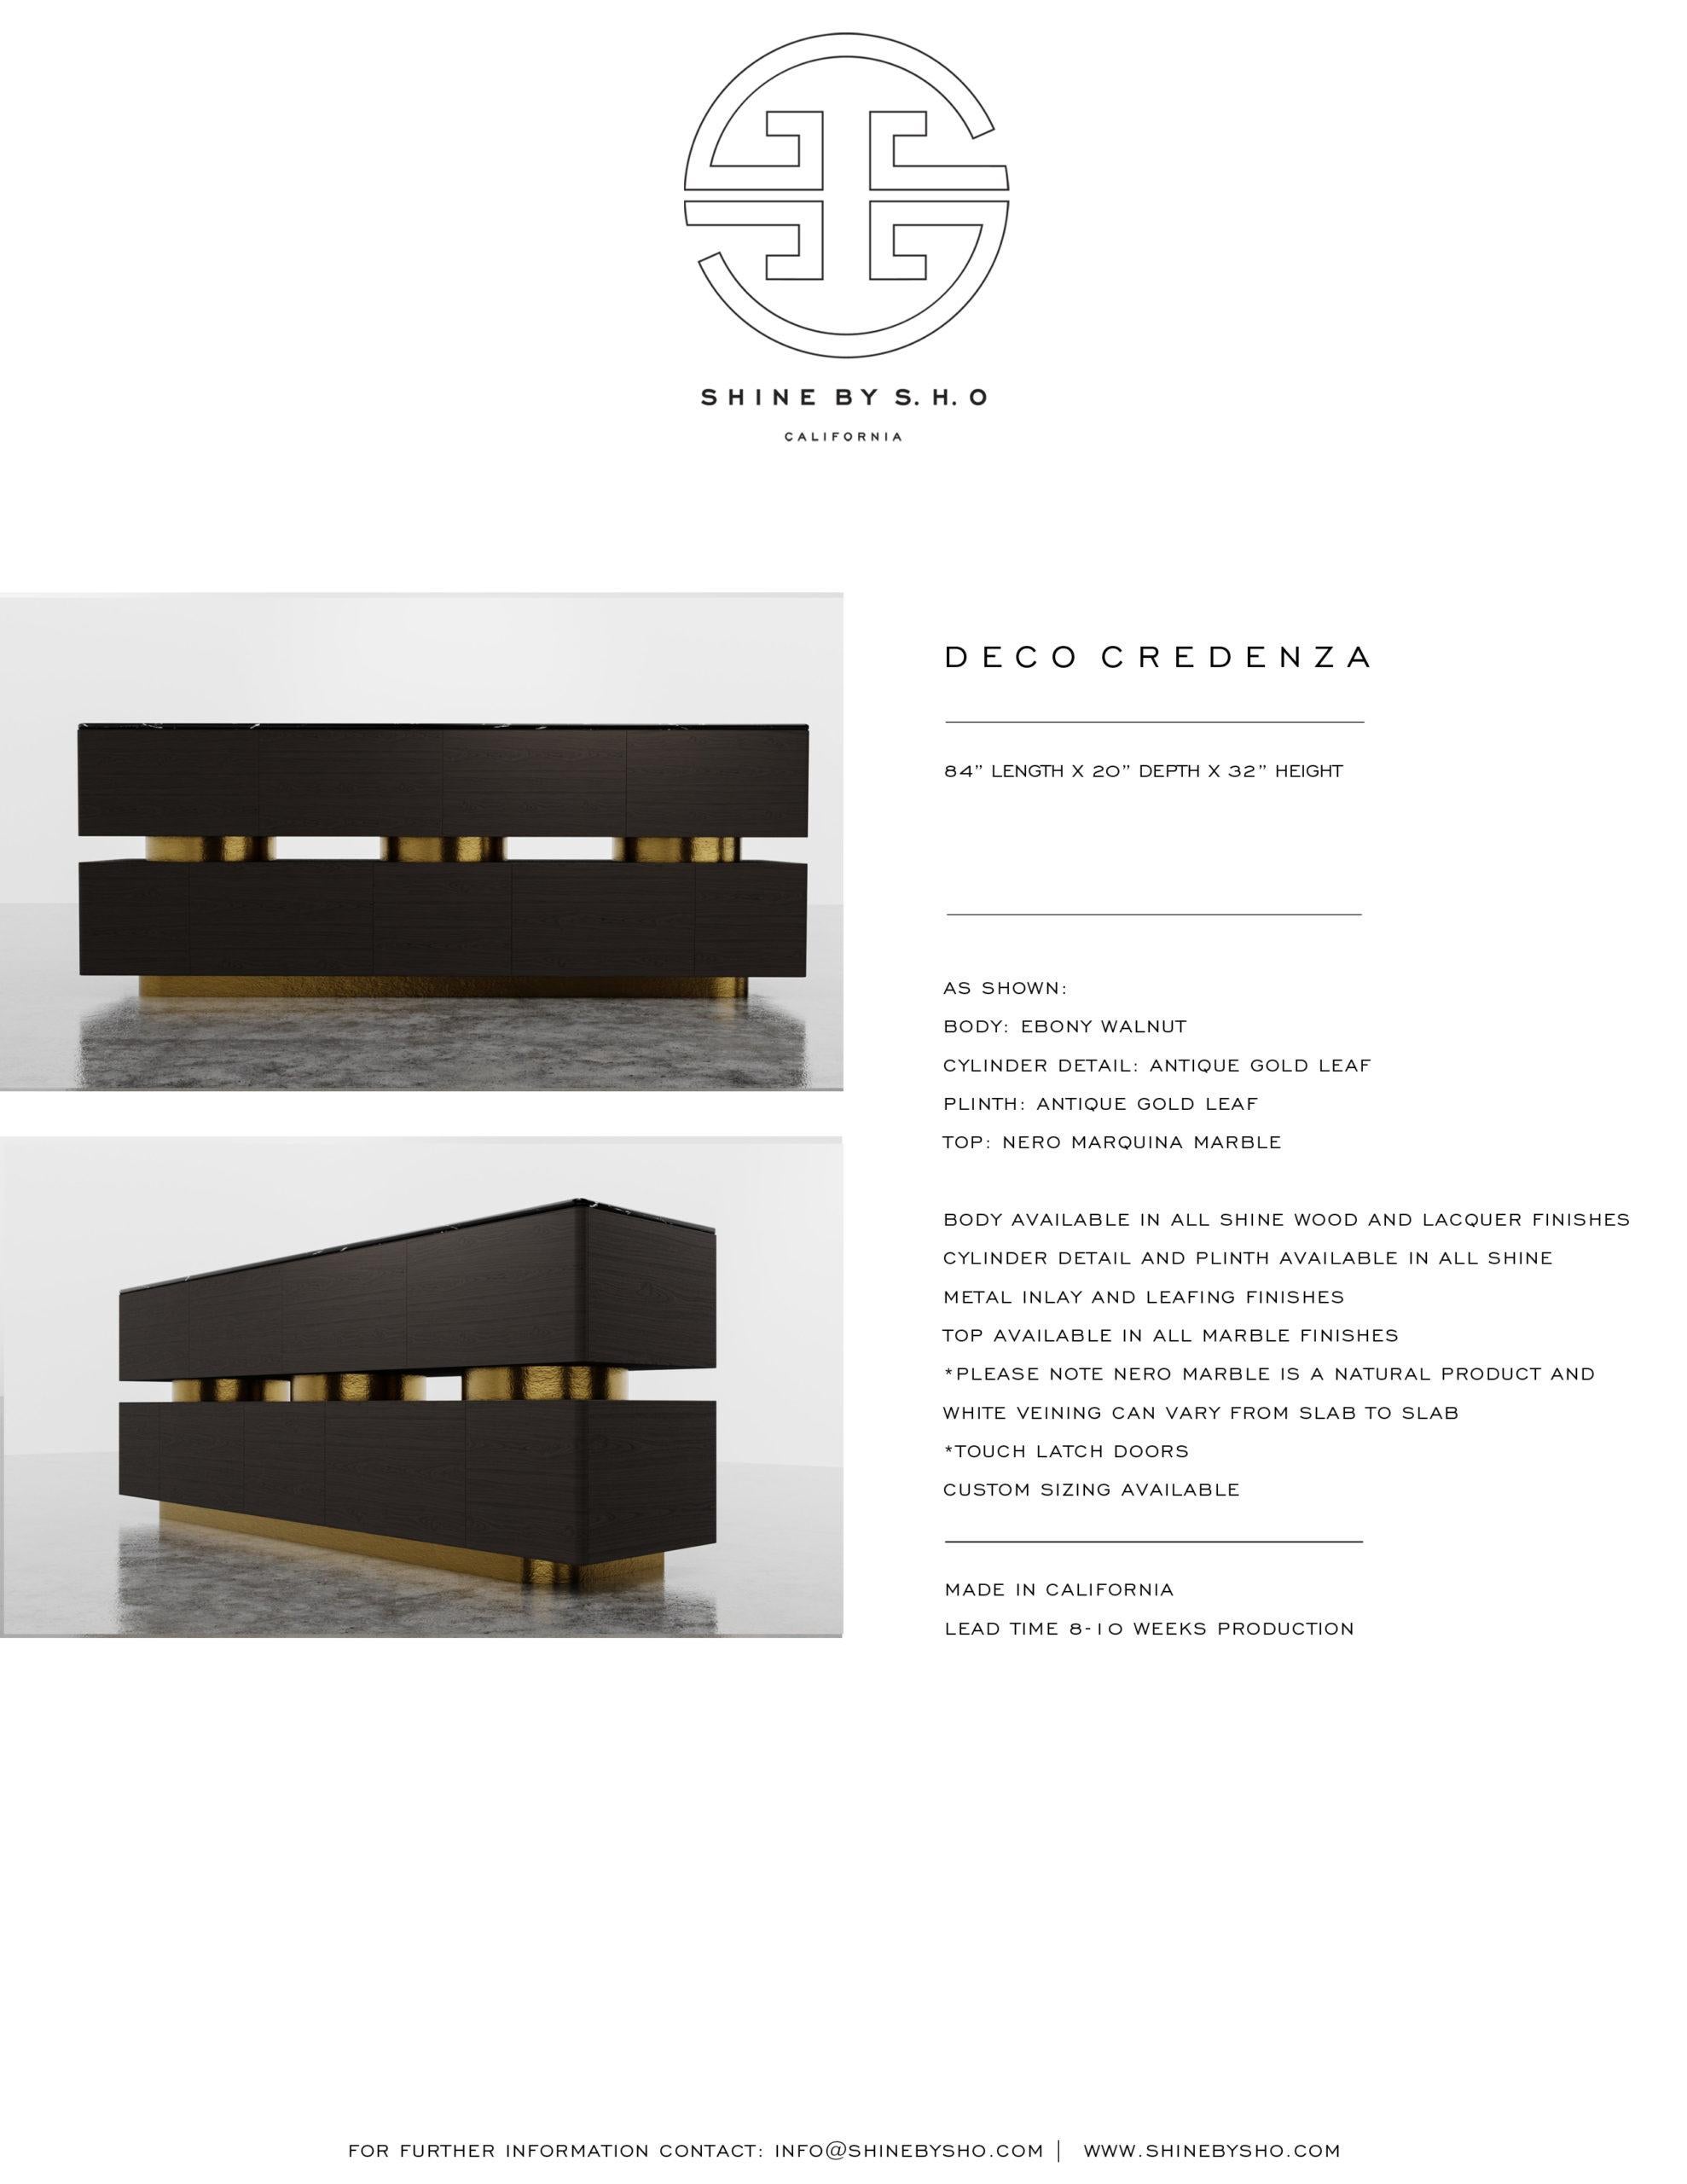 American DECO CREDENZA - Modern Ebony Walnut + Gold Leaf Cylinders + Nero Marquina Marble For Sale